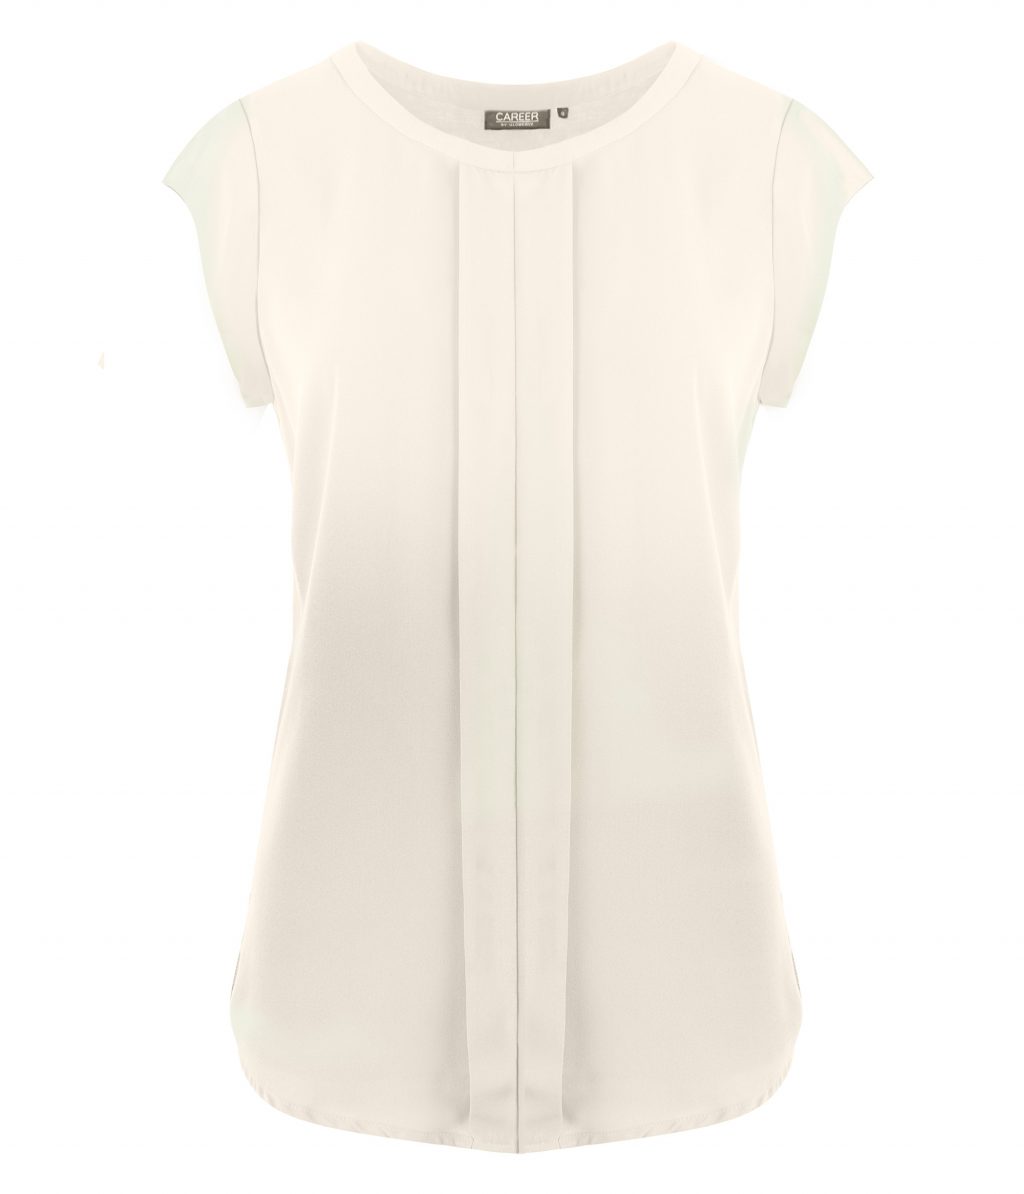 Mackenzie Blouse - Box Pleat Cap Sleeve Top Ivory - Uniform Edit